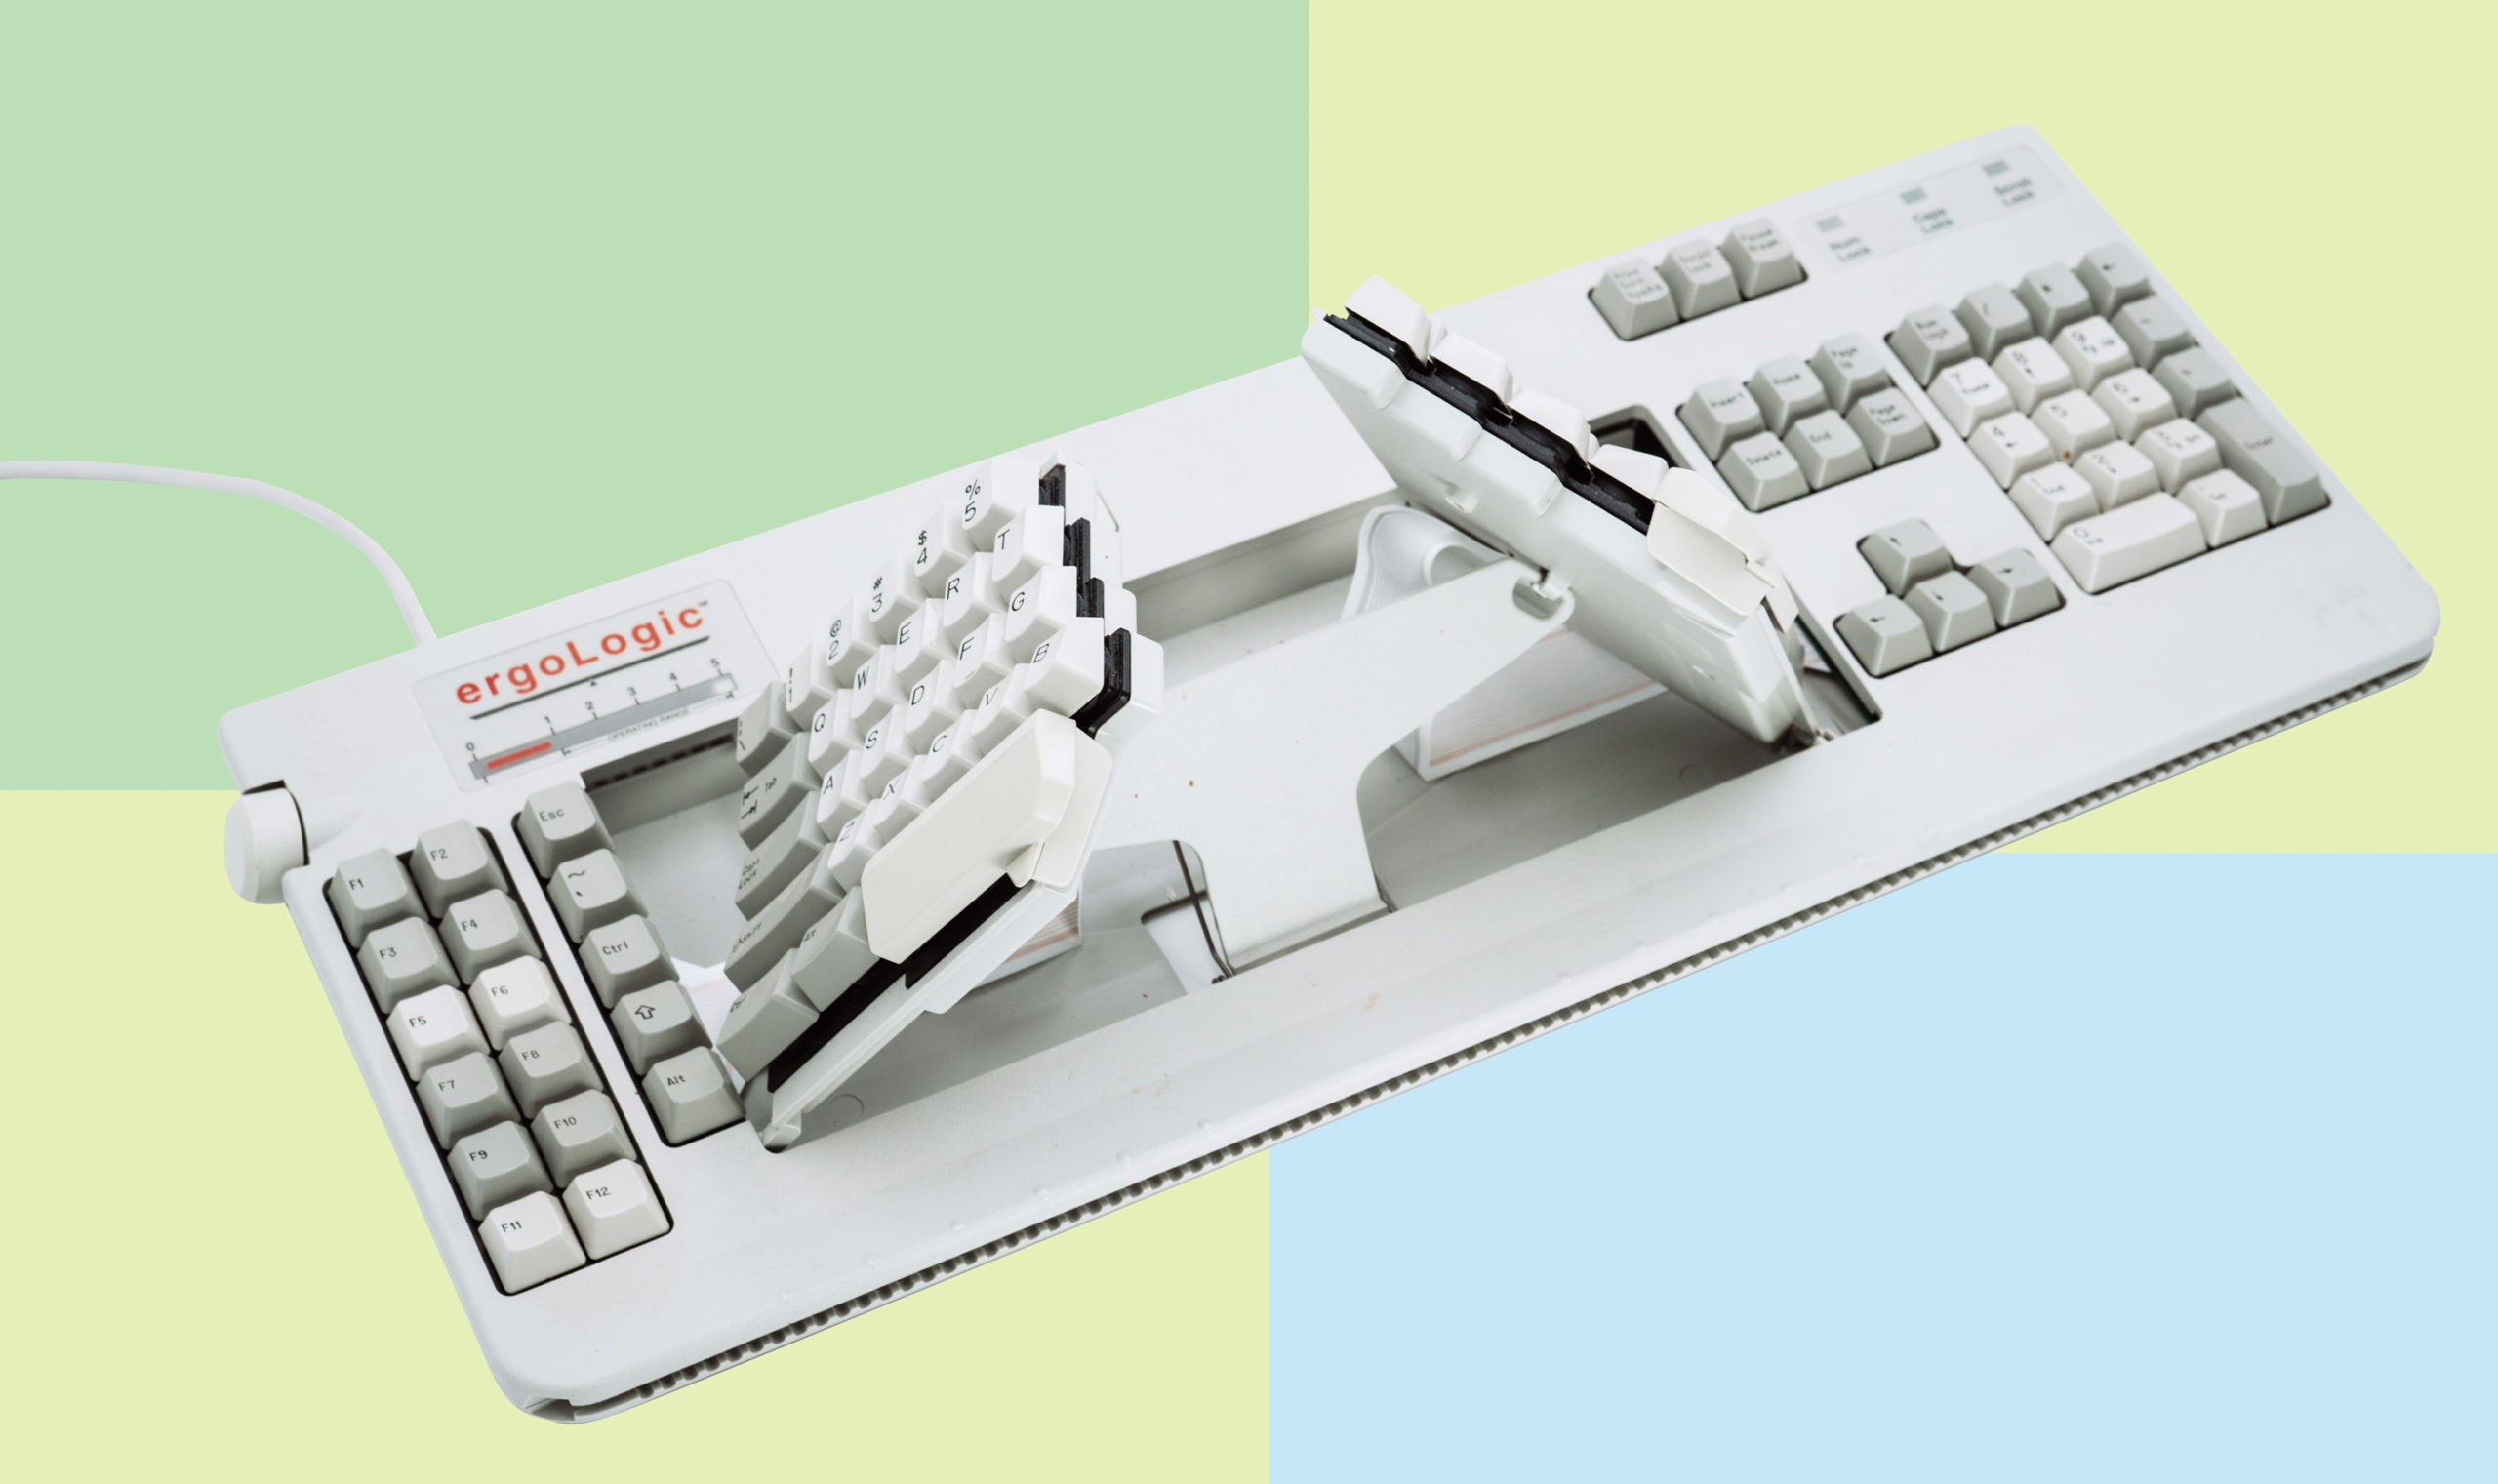 ergoLogic FlexPro keyboard